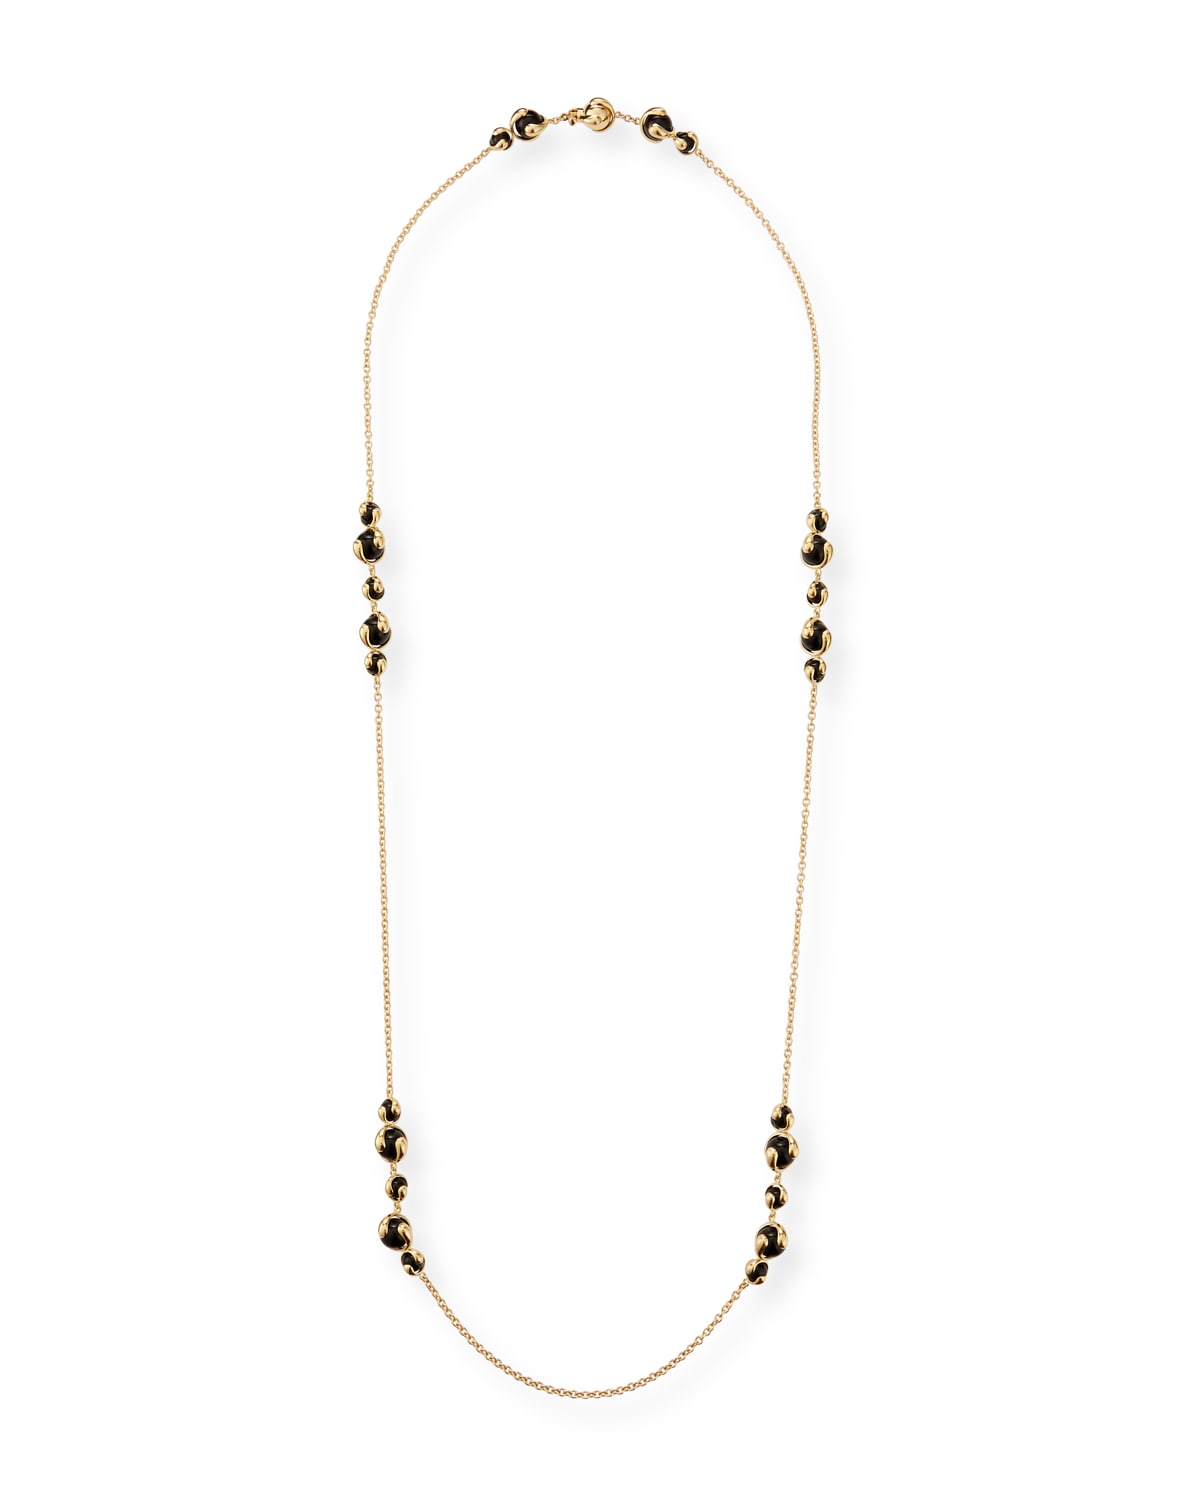 Marina B Cardan 18k Yellow Gold Black Onyx Necklace, 40"L